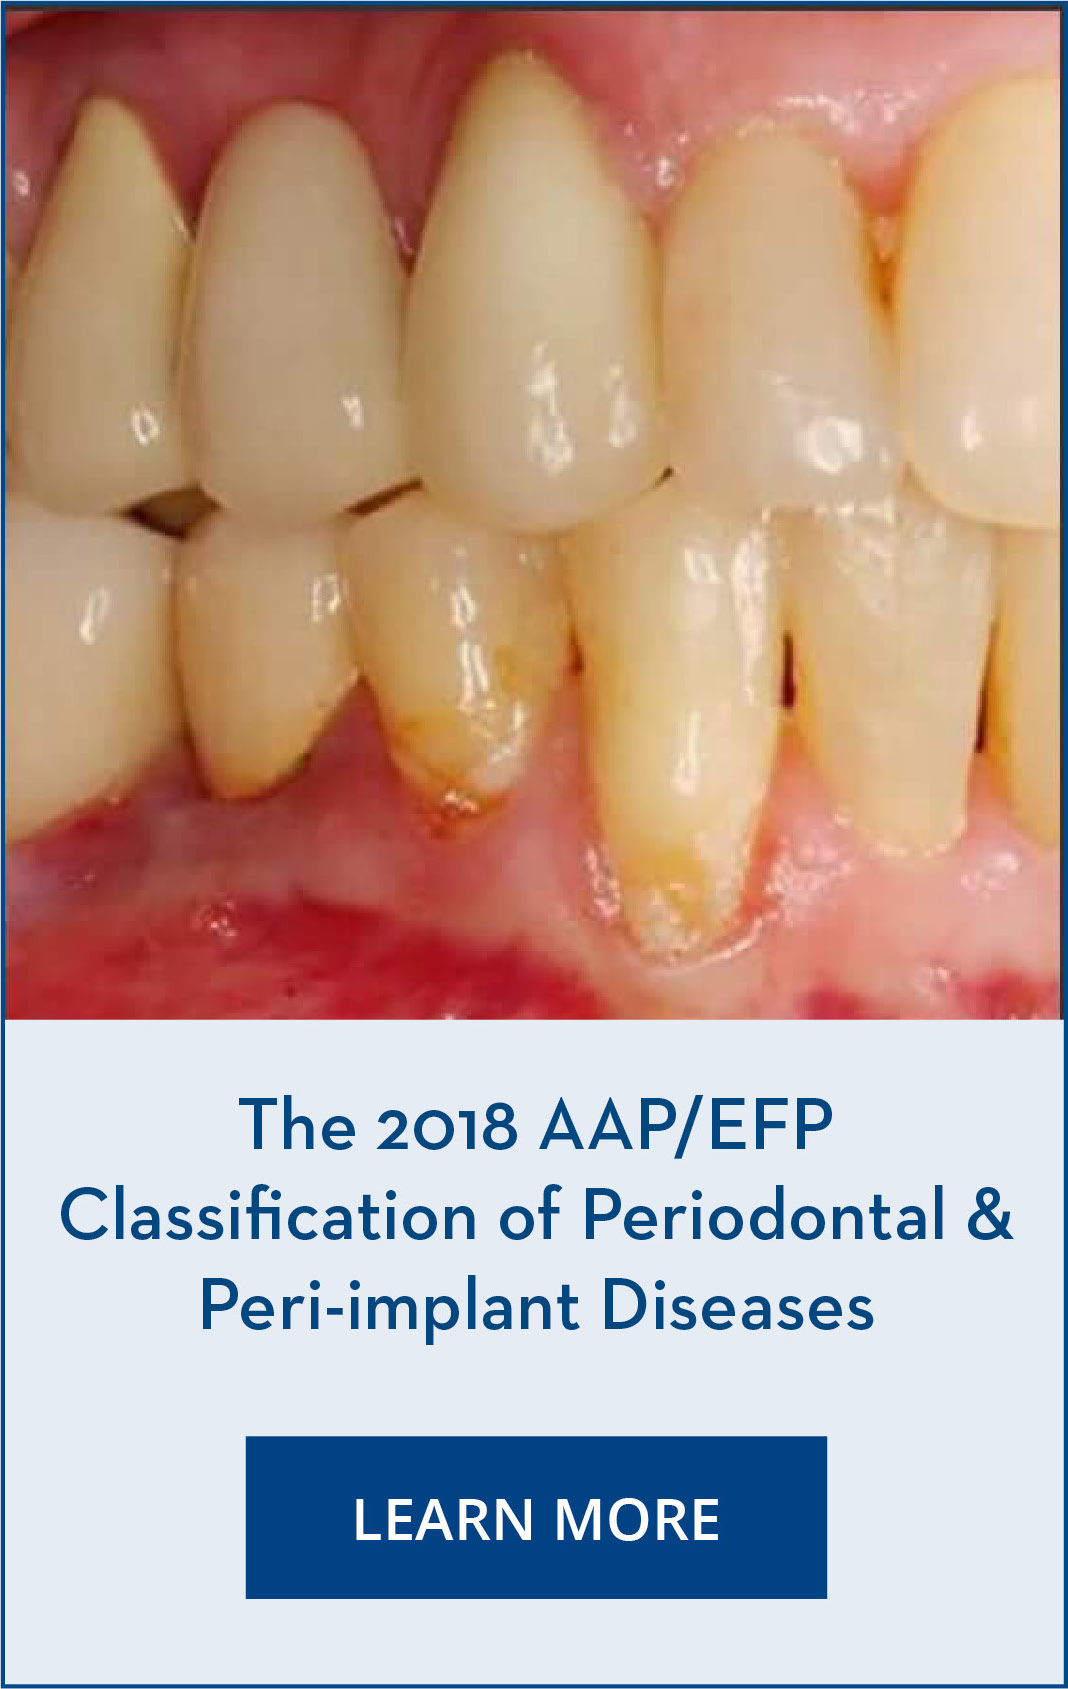 AAP/EFP periodontal classification image2